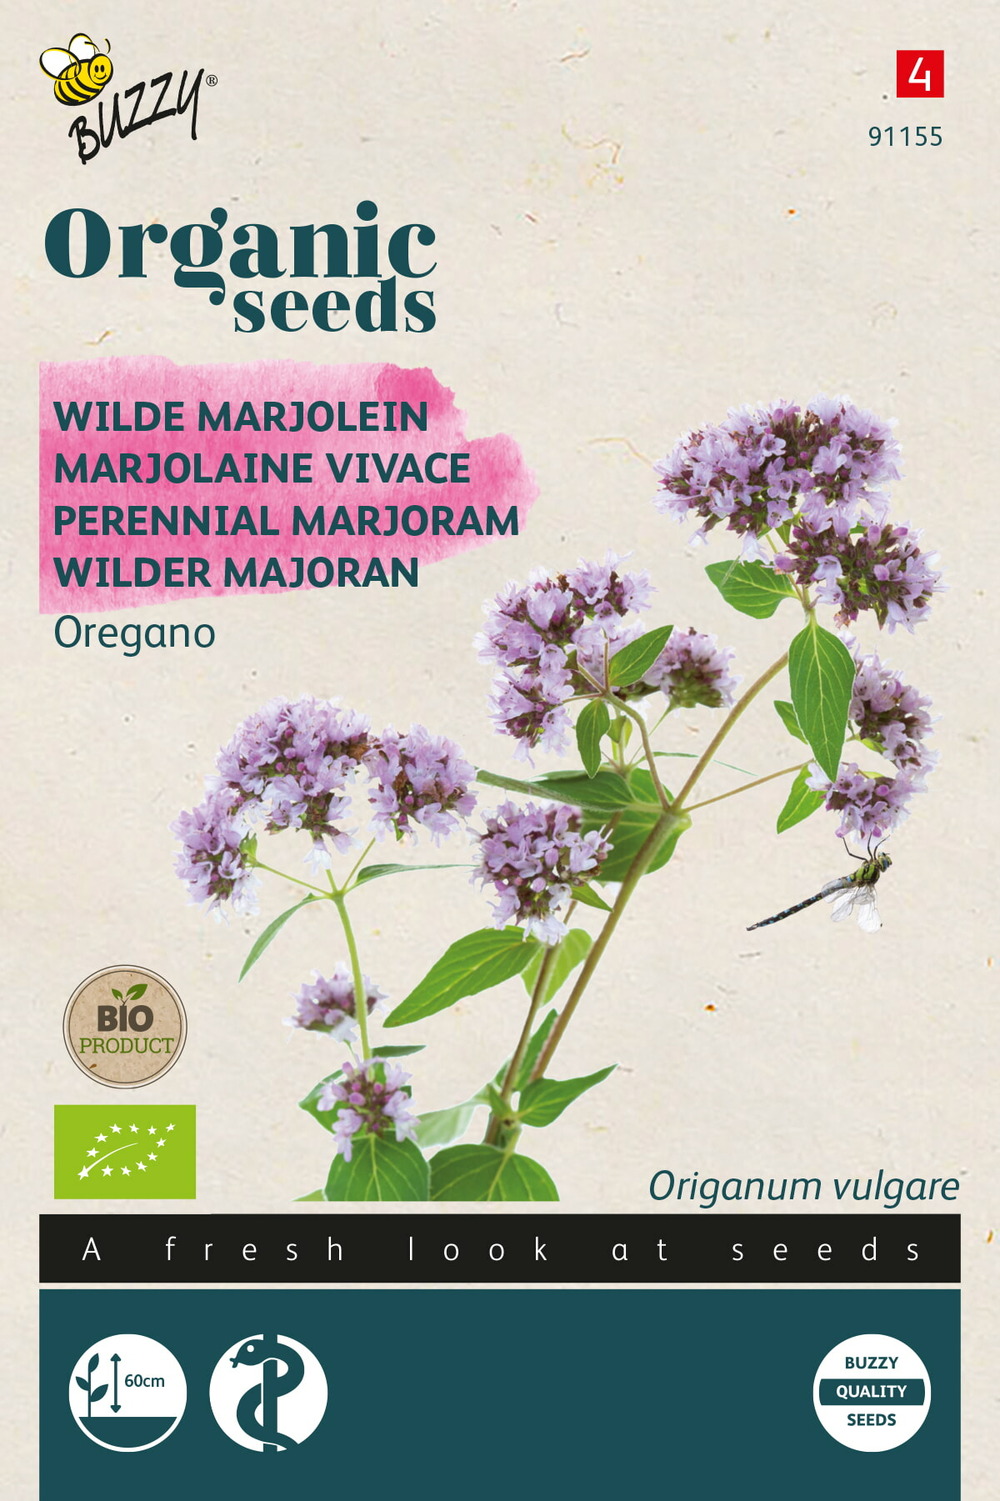 Buzzy organic marjolaine vivace – oregano (bio) - ca. 0,1 gr